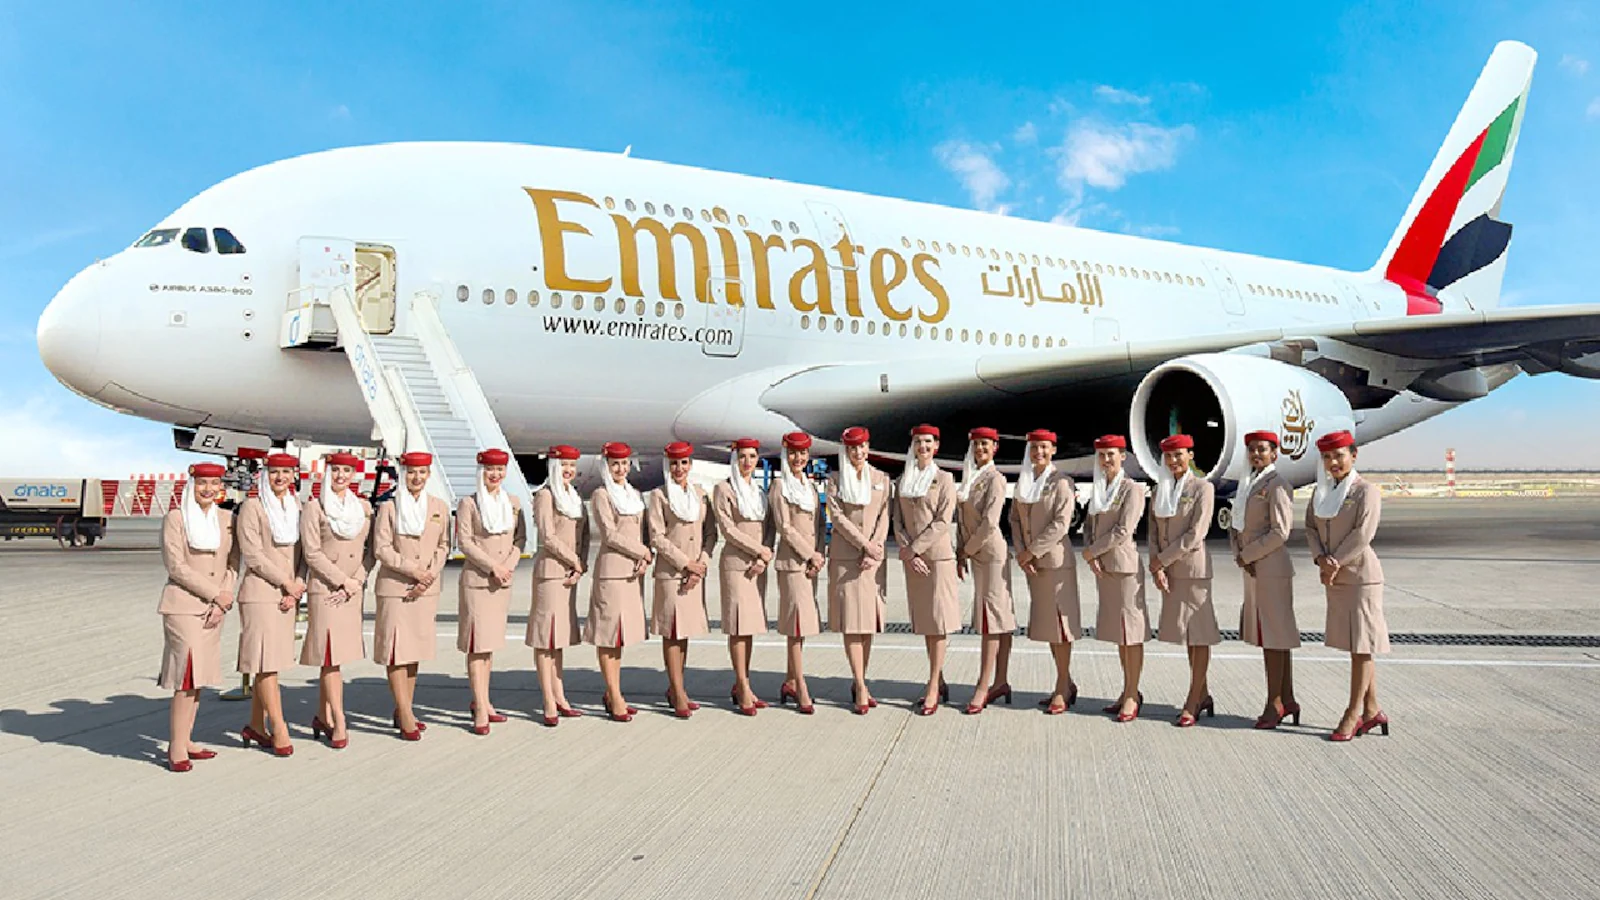 Flight with Emirates